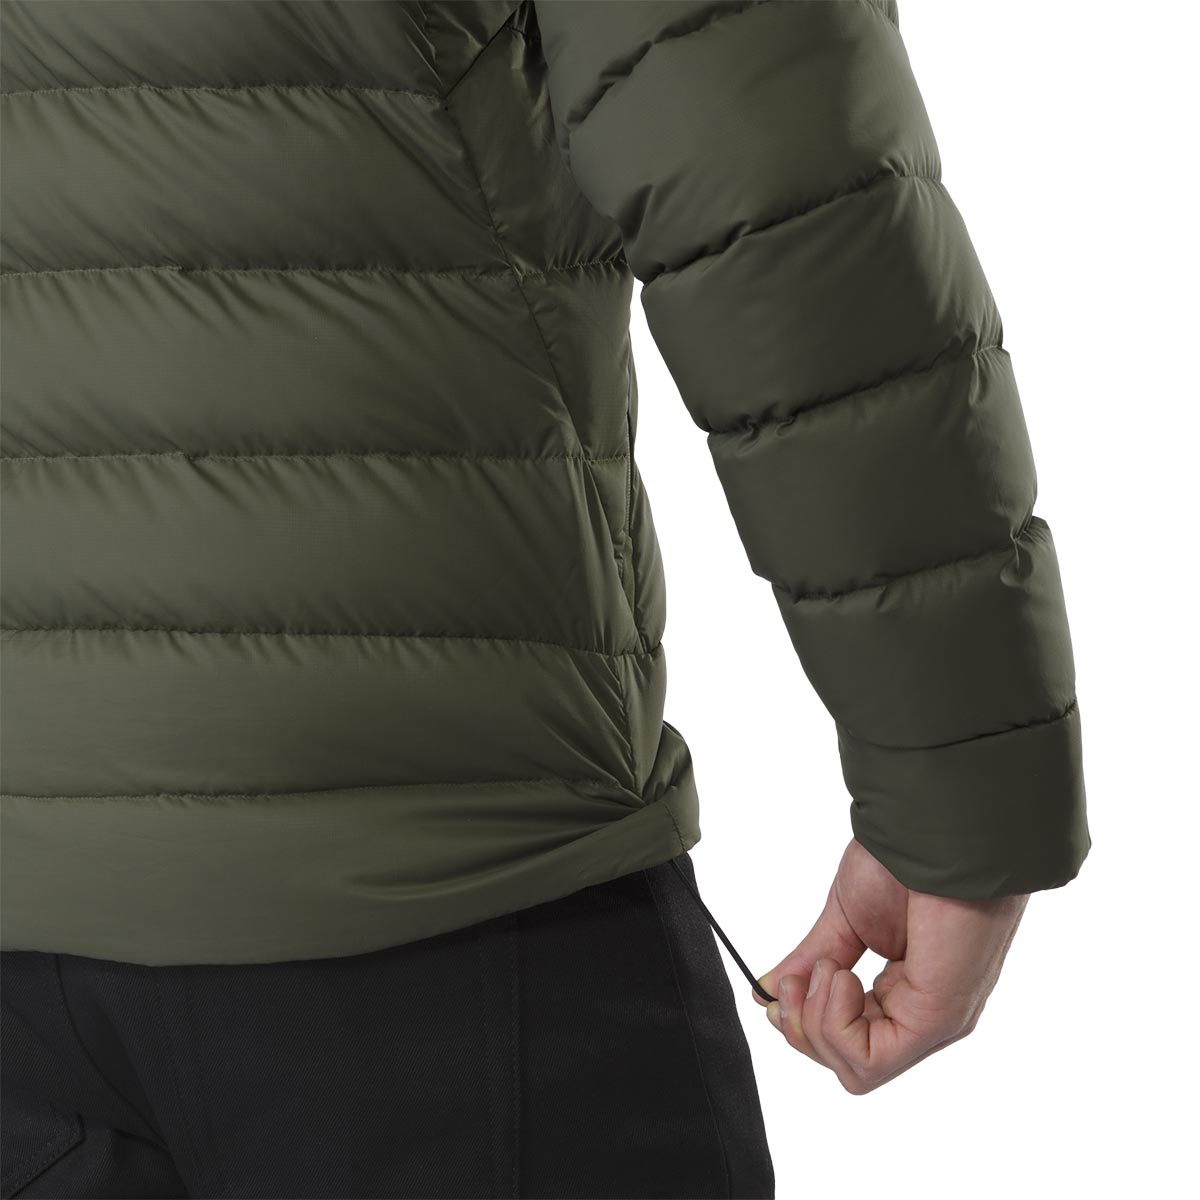 Arc'teryx Thorium AR Jacket, men's, discontinued Fall 2018 colors (free ...